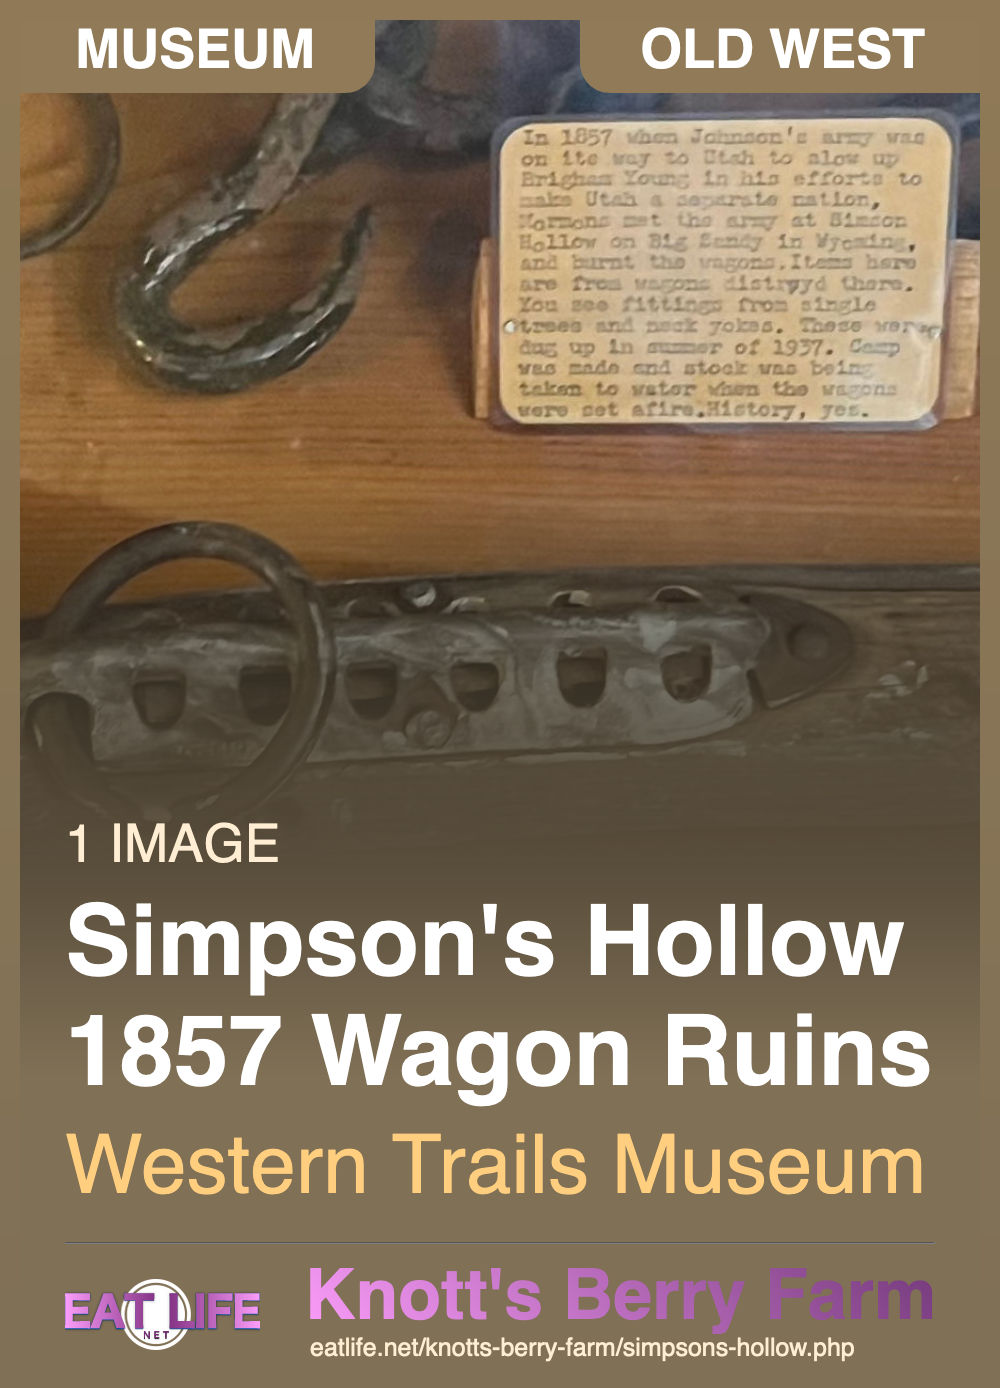 Simpson's Hollow Wagon Ruins